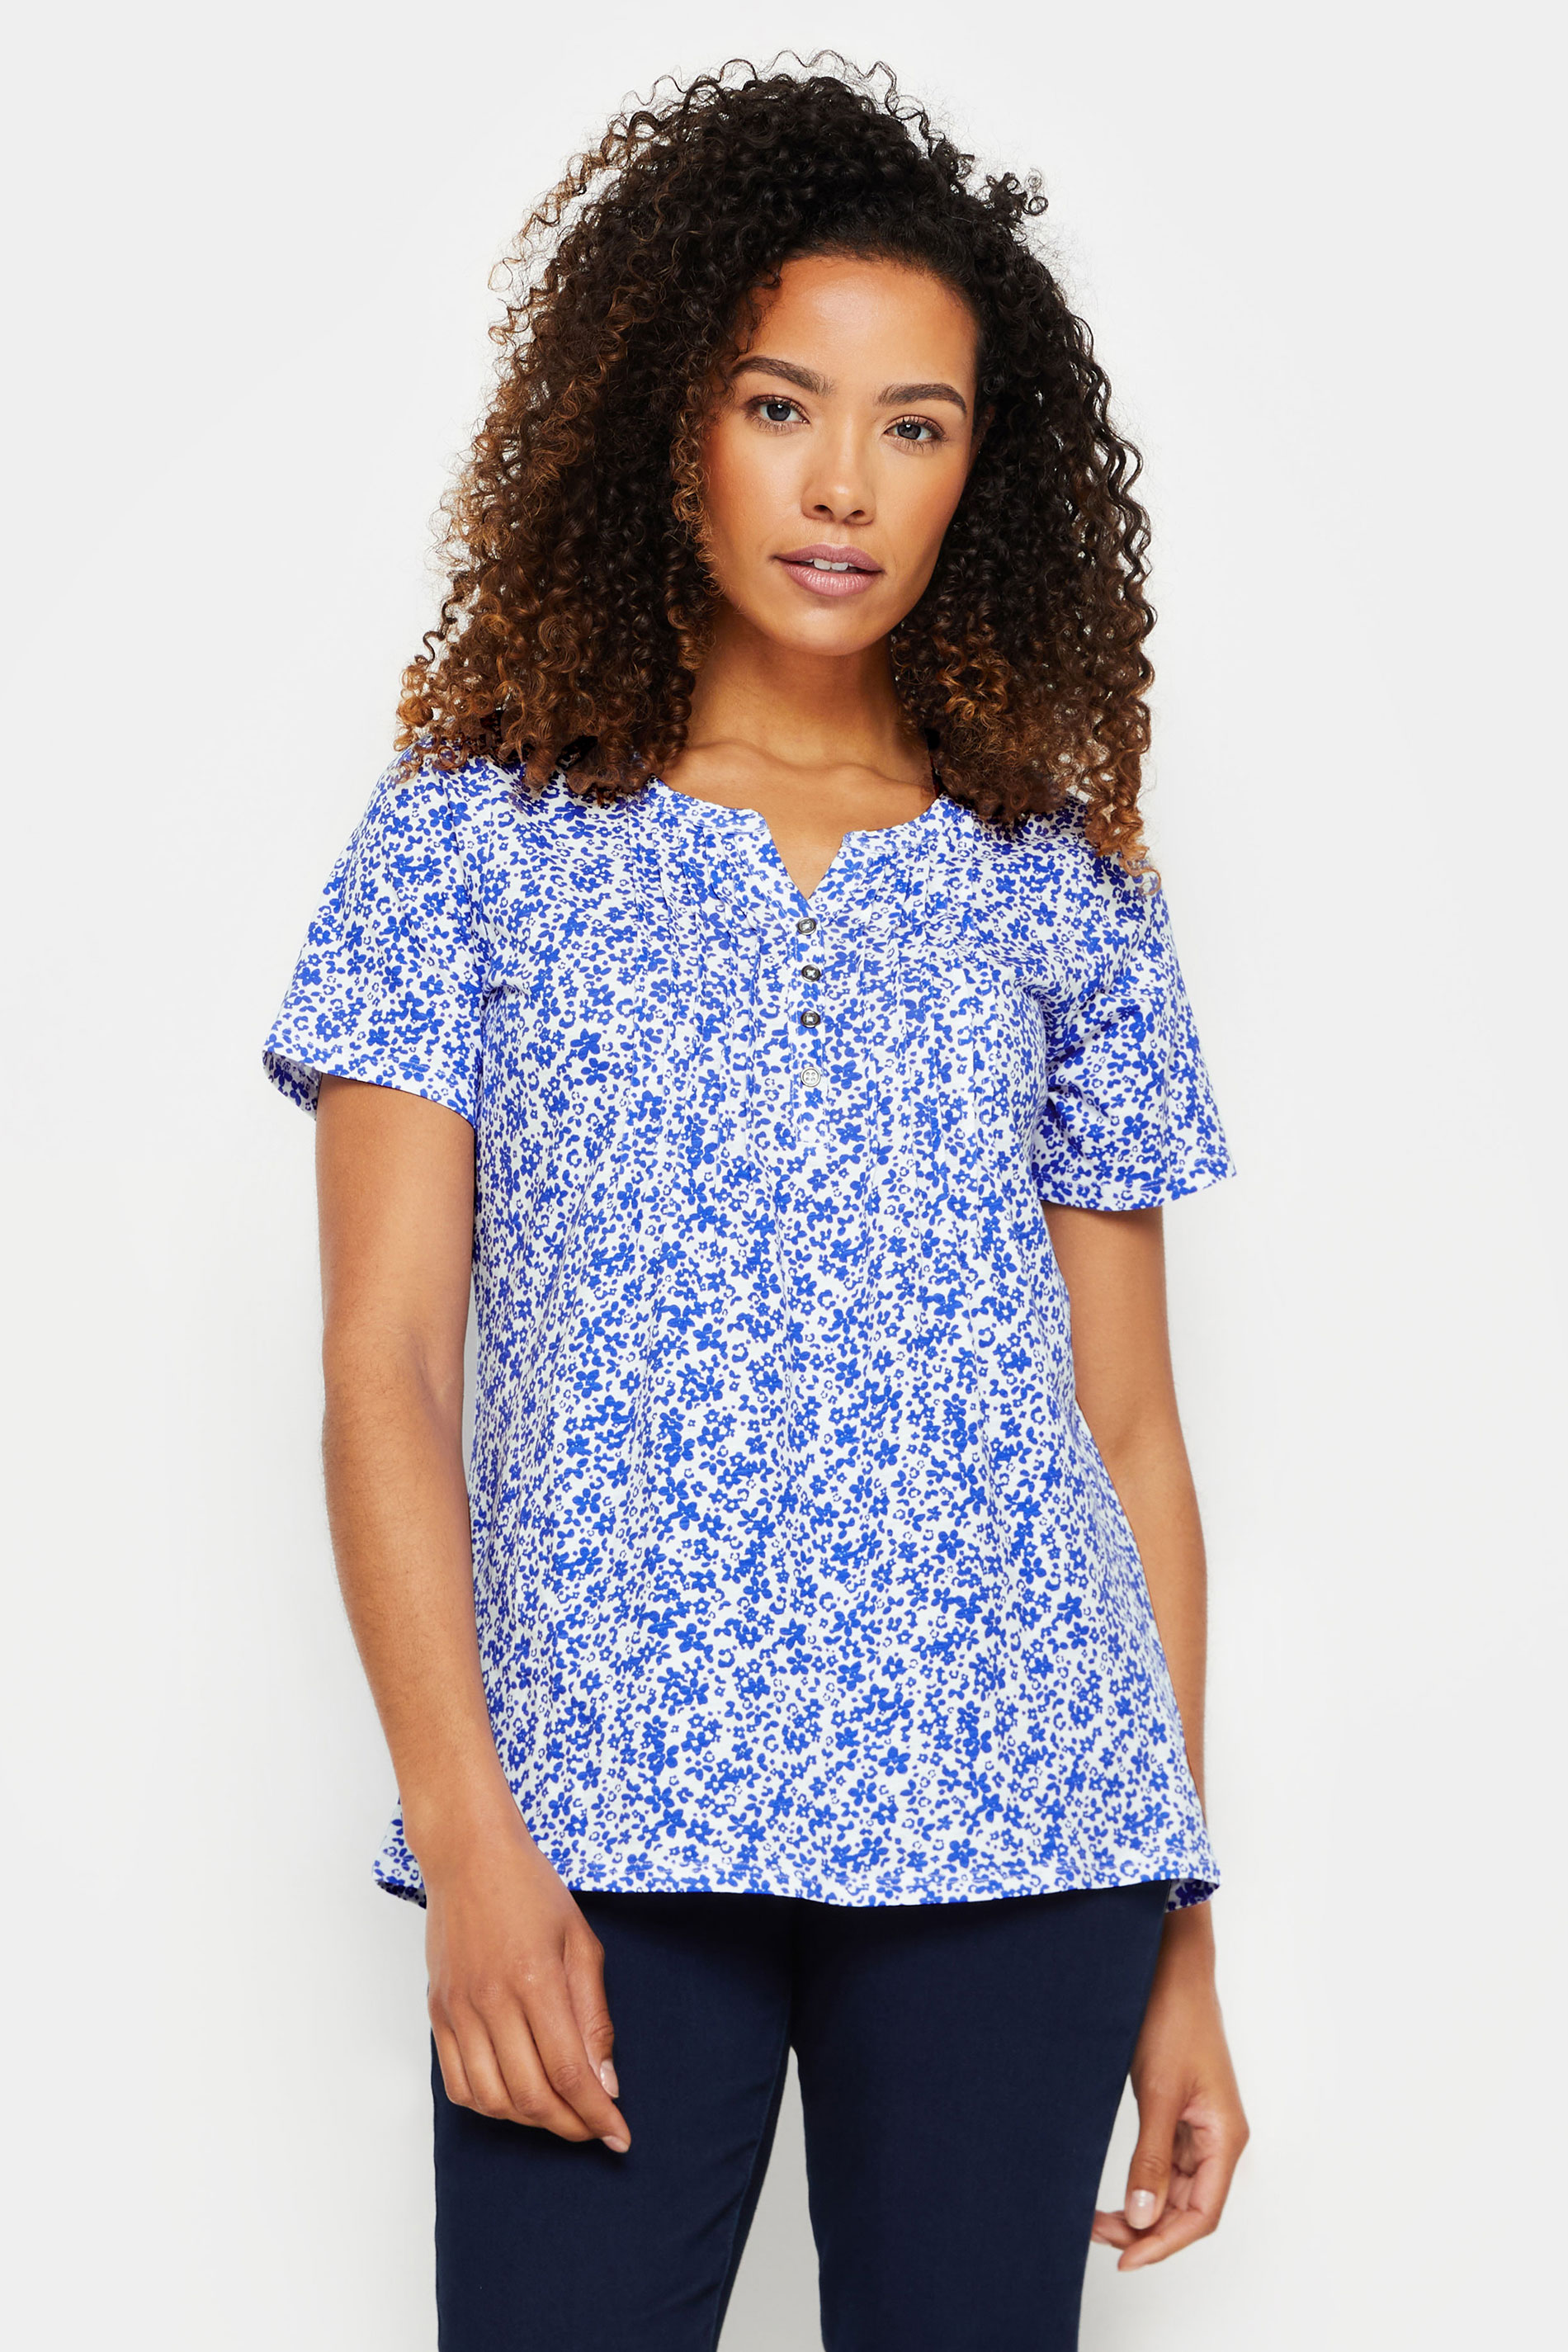 M&Co Blue Flower Print Short Sleeve Cotton Henley Top | M&Co 1